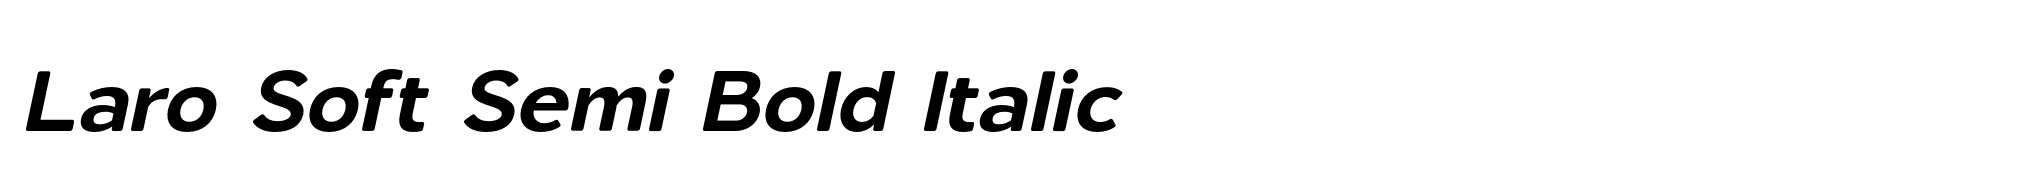 Laro Soft Semi Bold Italic image